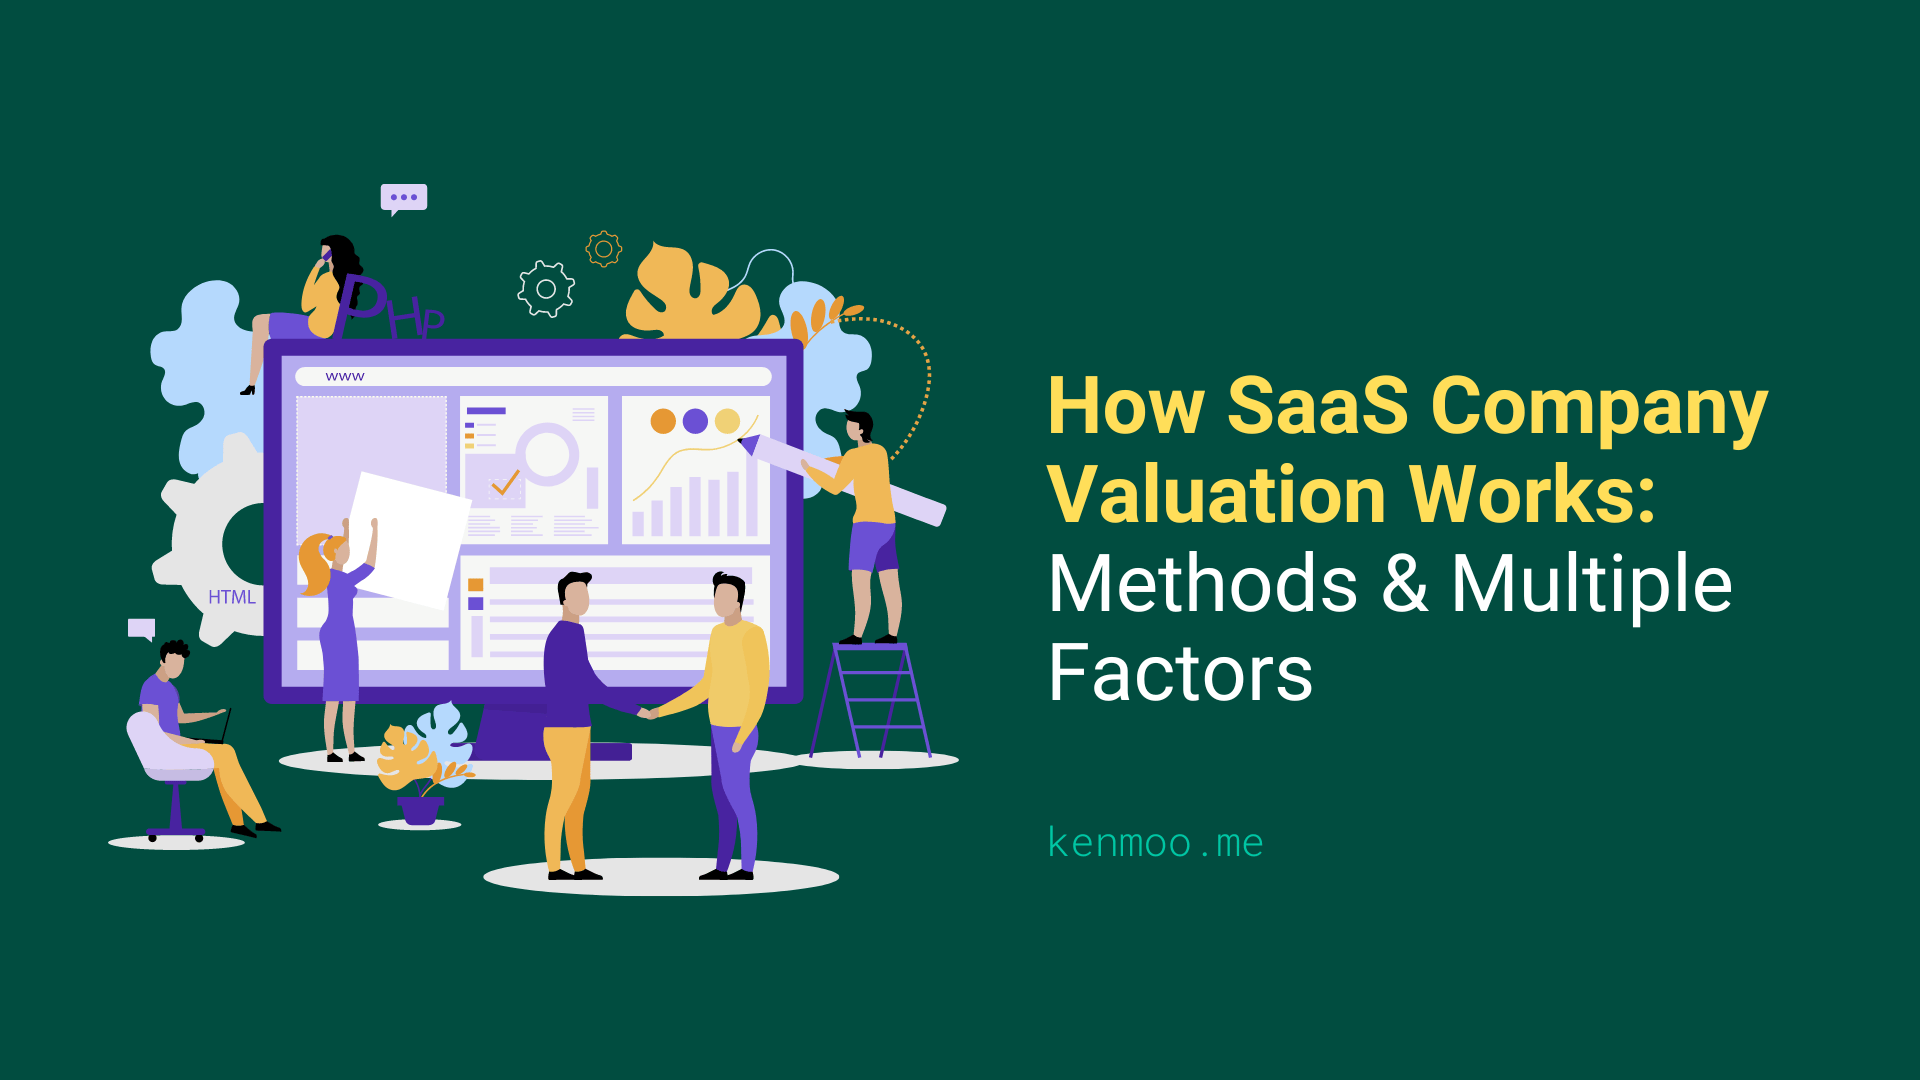 How SaaS Company Valuation Works: Methods & Multiple Factors